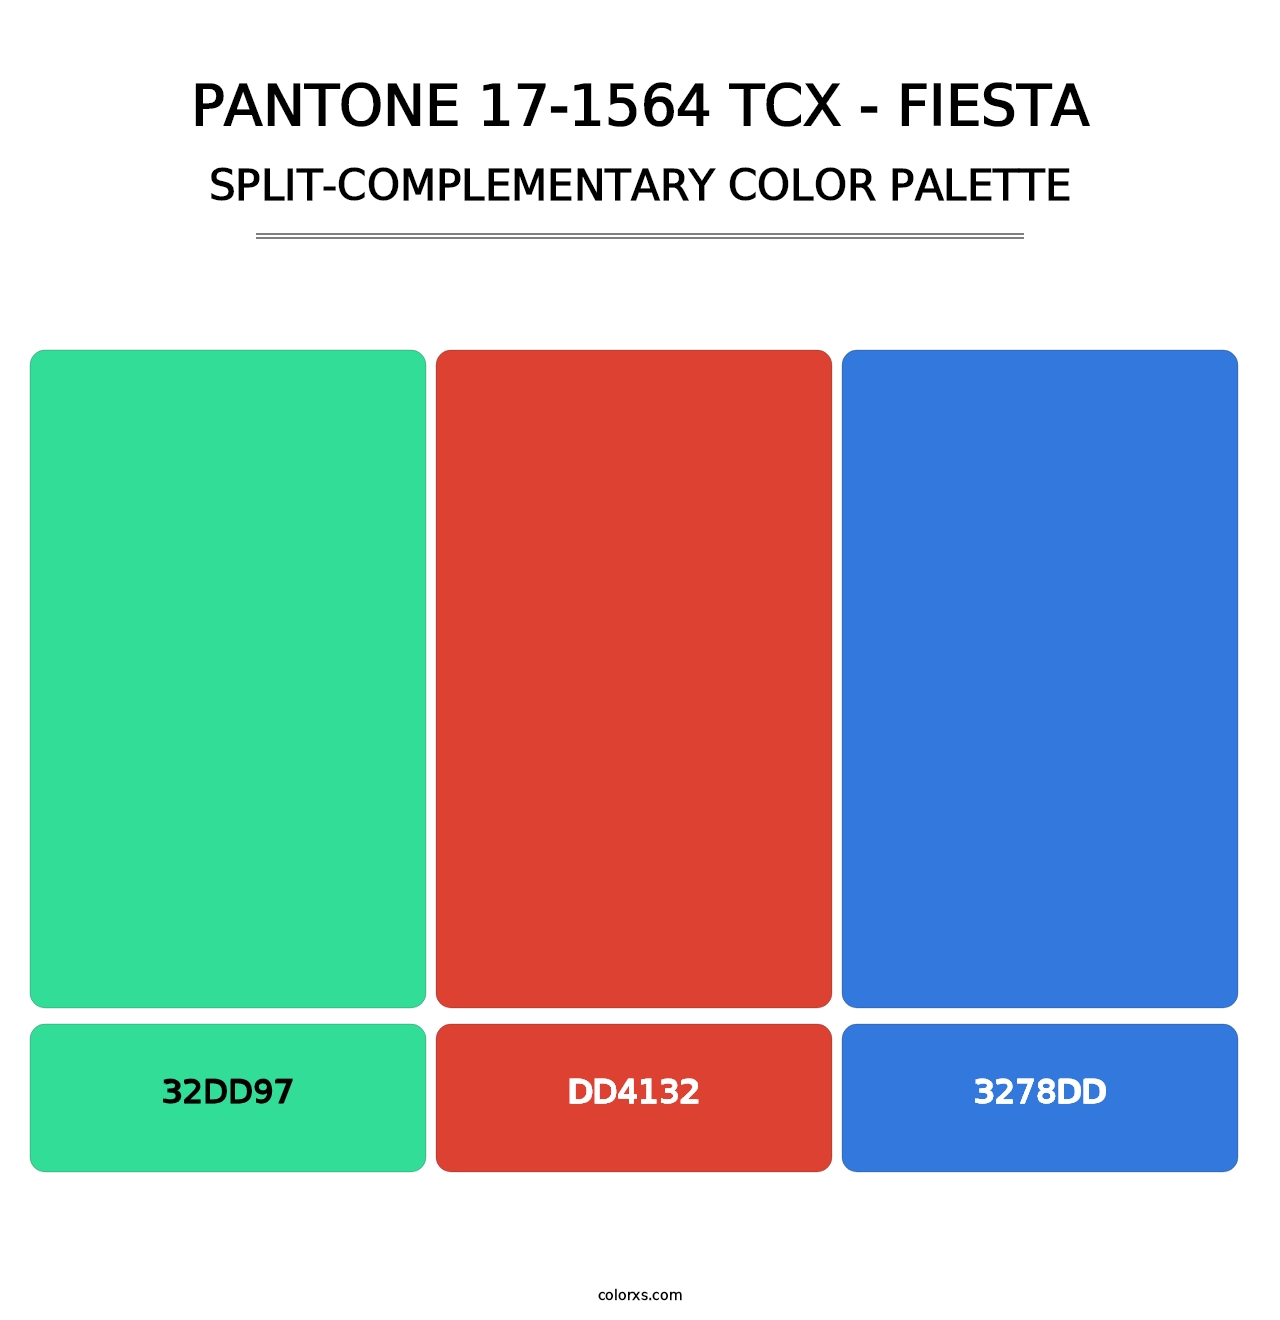 PANTONE 17-1564 TCX - Fiesta - Split-Complementary Color Palette